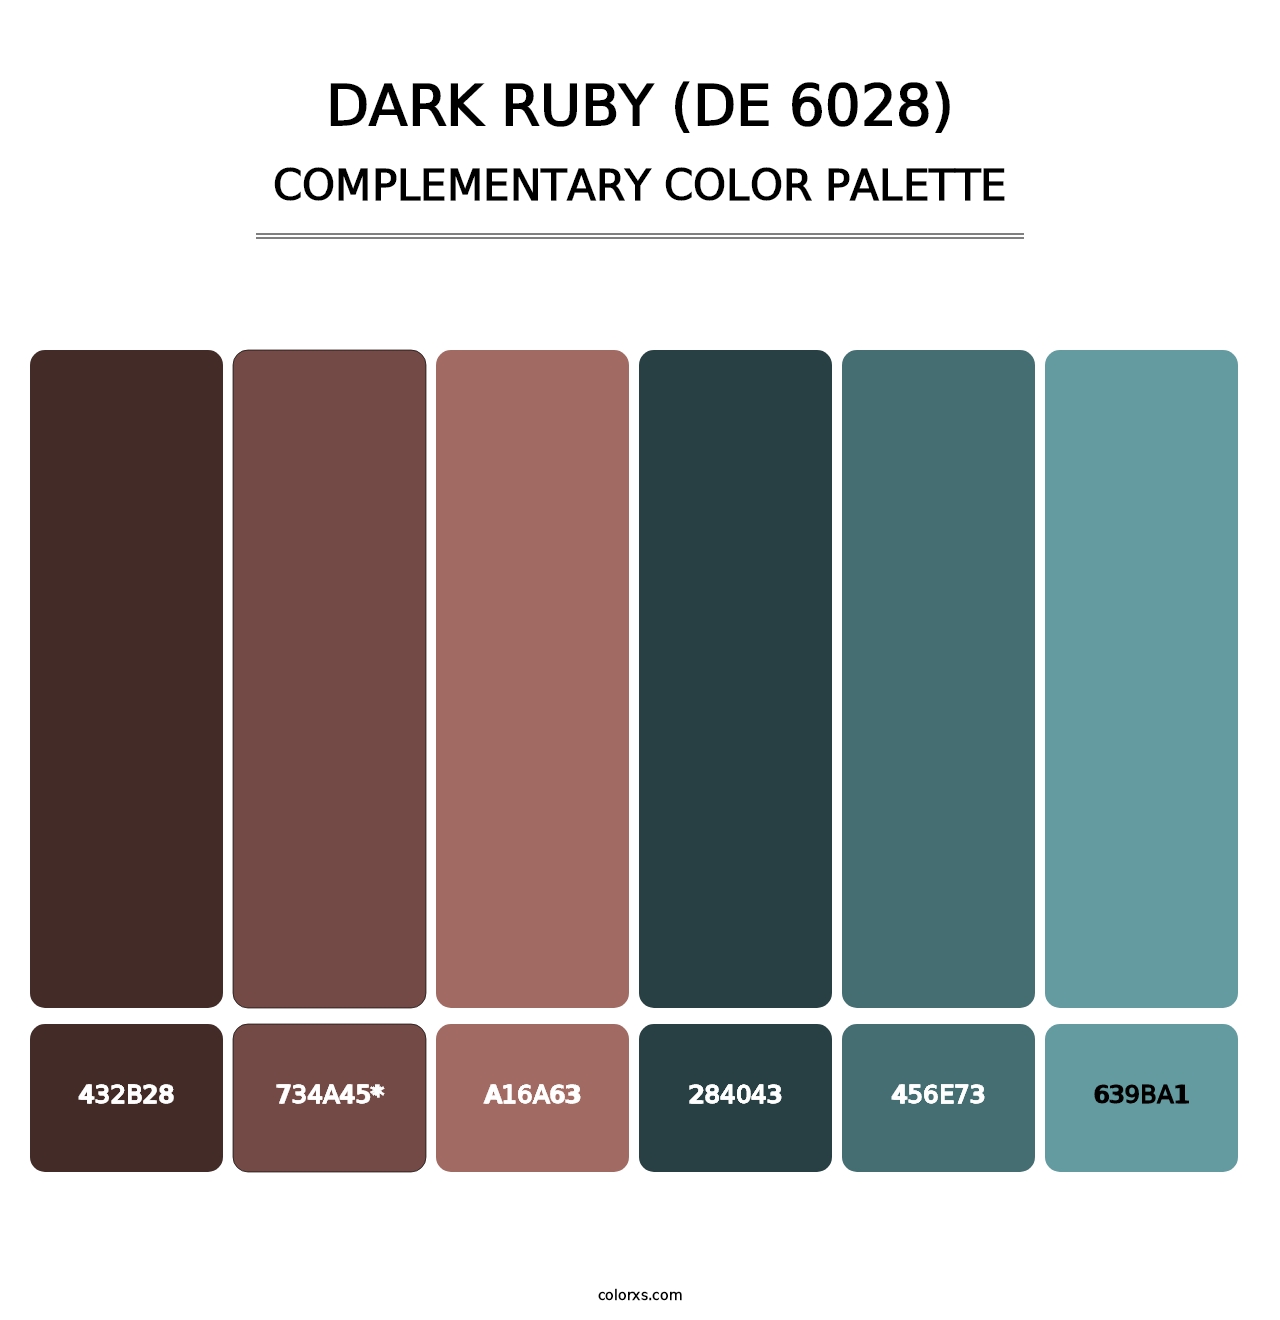 Dark Ruby (DE 6028) - Complementary Color Palette